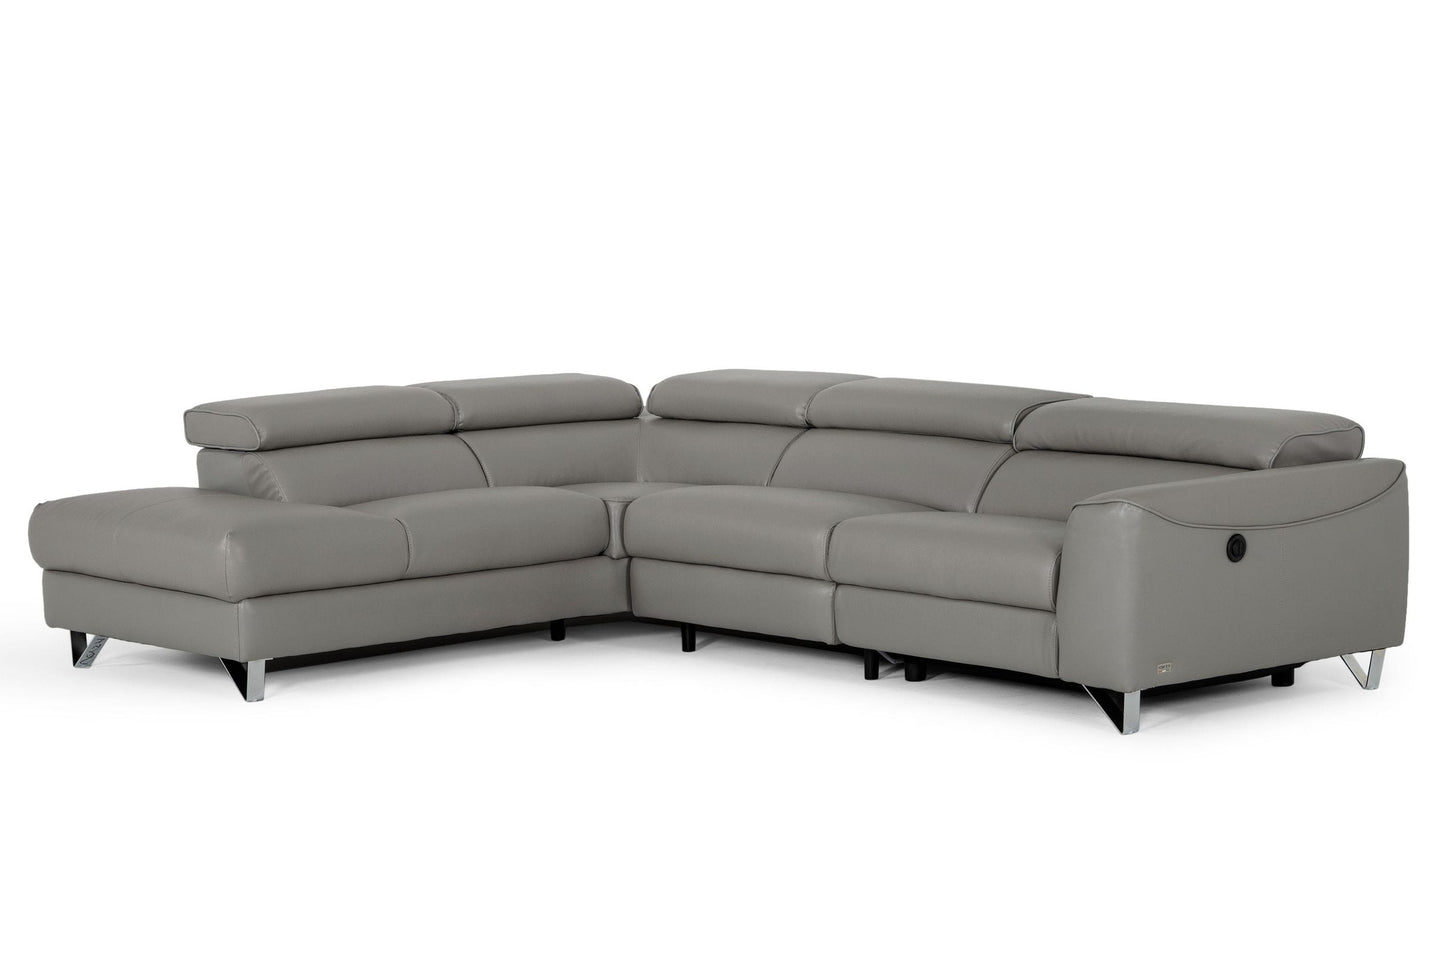 VIG Furniture Divani Casa Versa Grey Leather Left Sectional Sofa Recliner